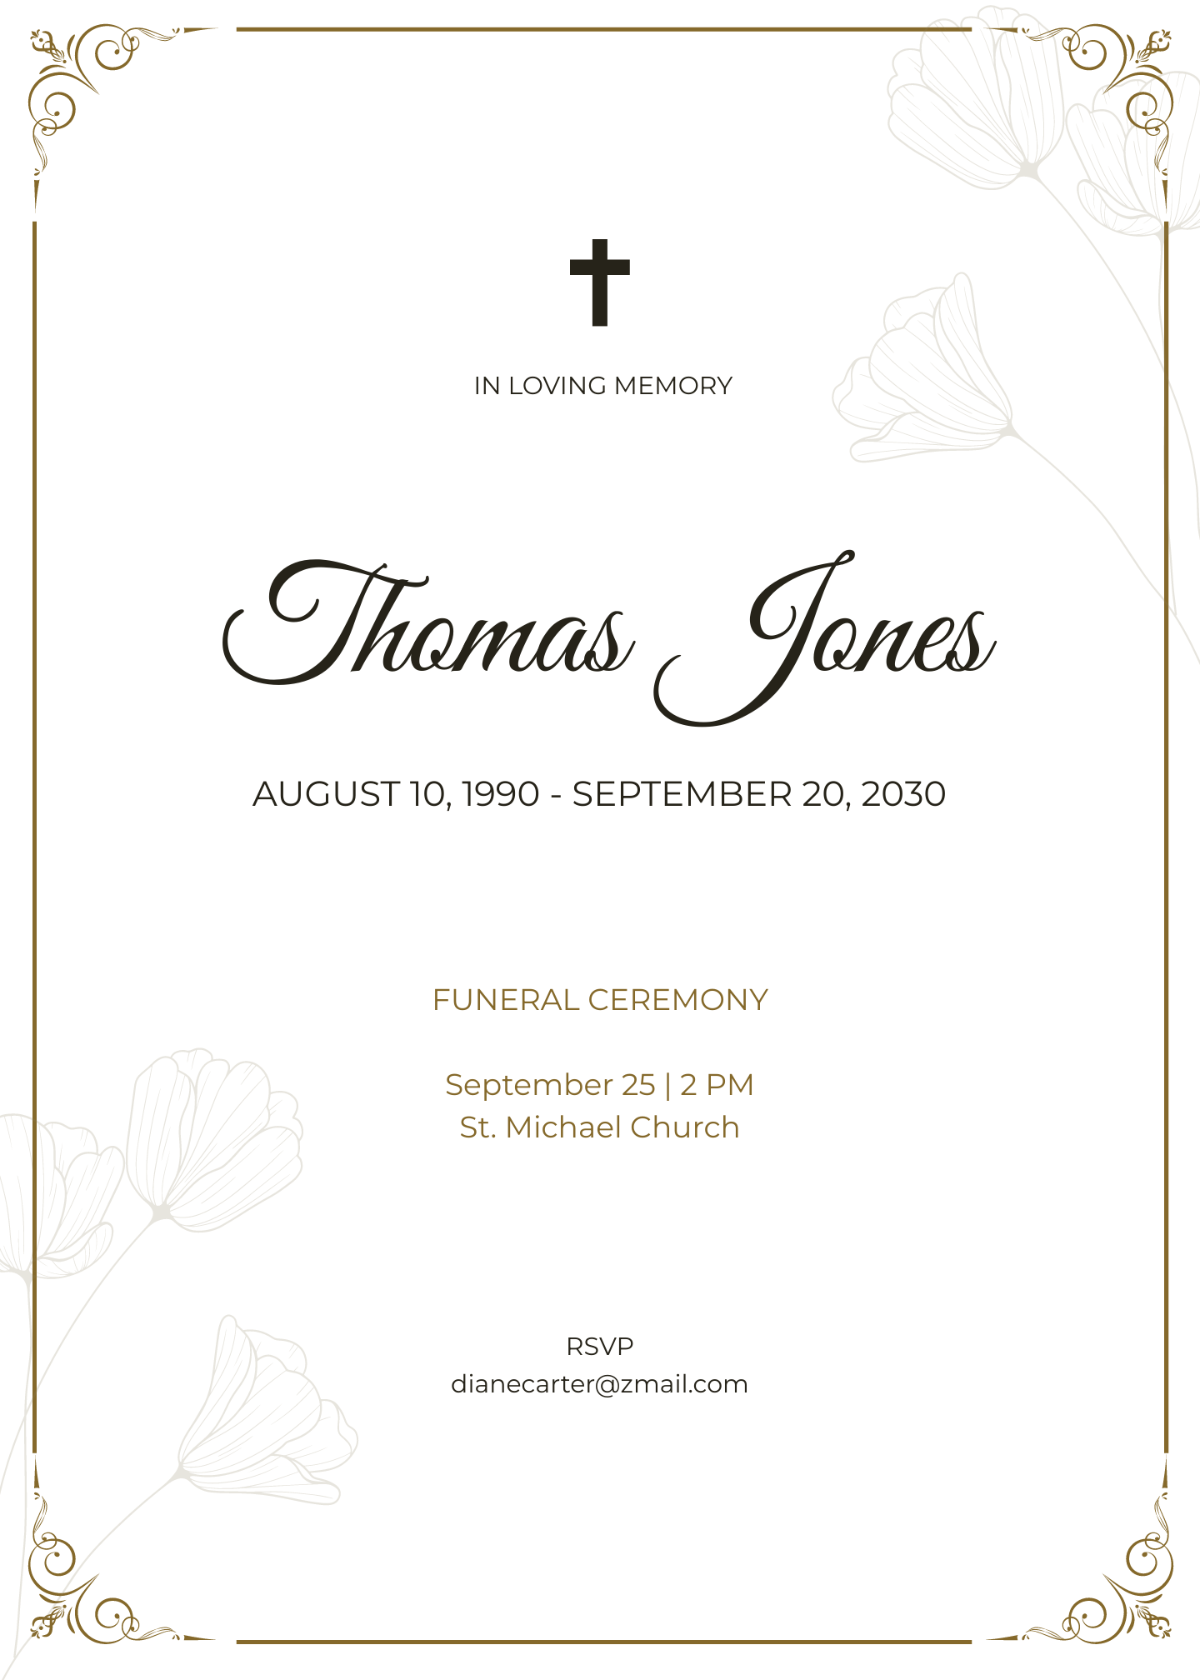 Funeral Ceremony Invitation Card Template